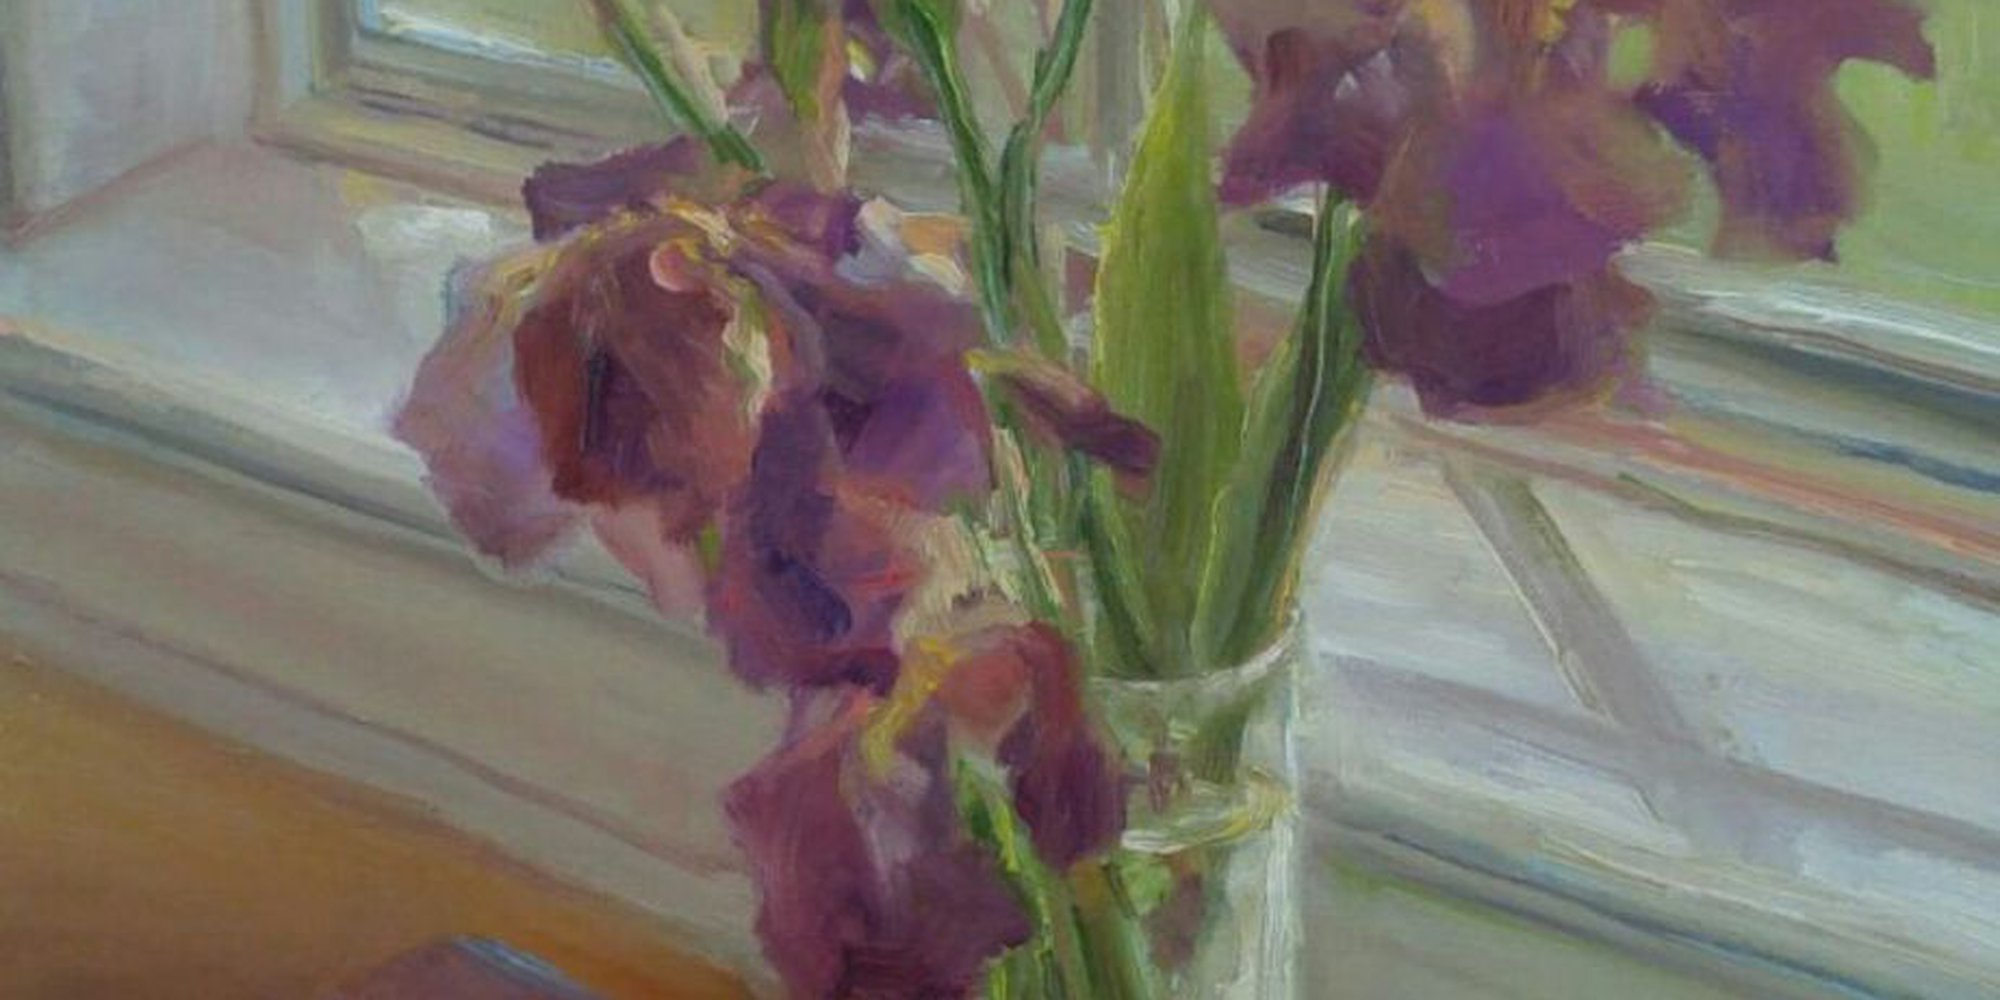 Art of the Day: "Irises" by Alexander Koltakov